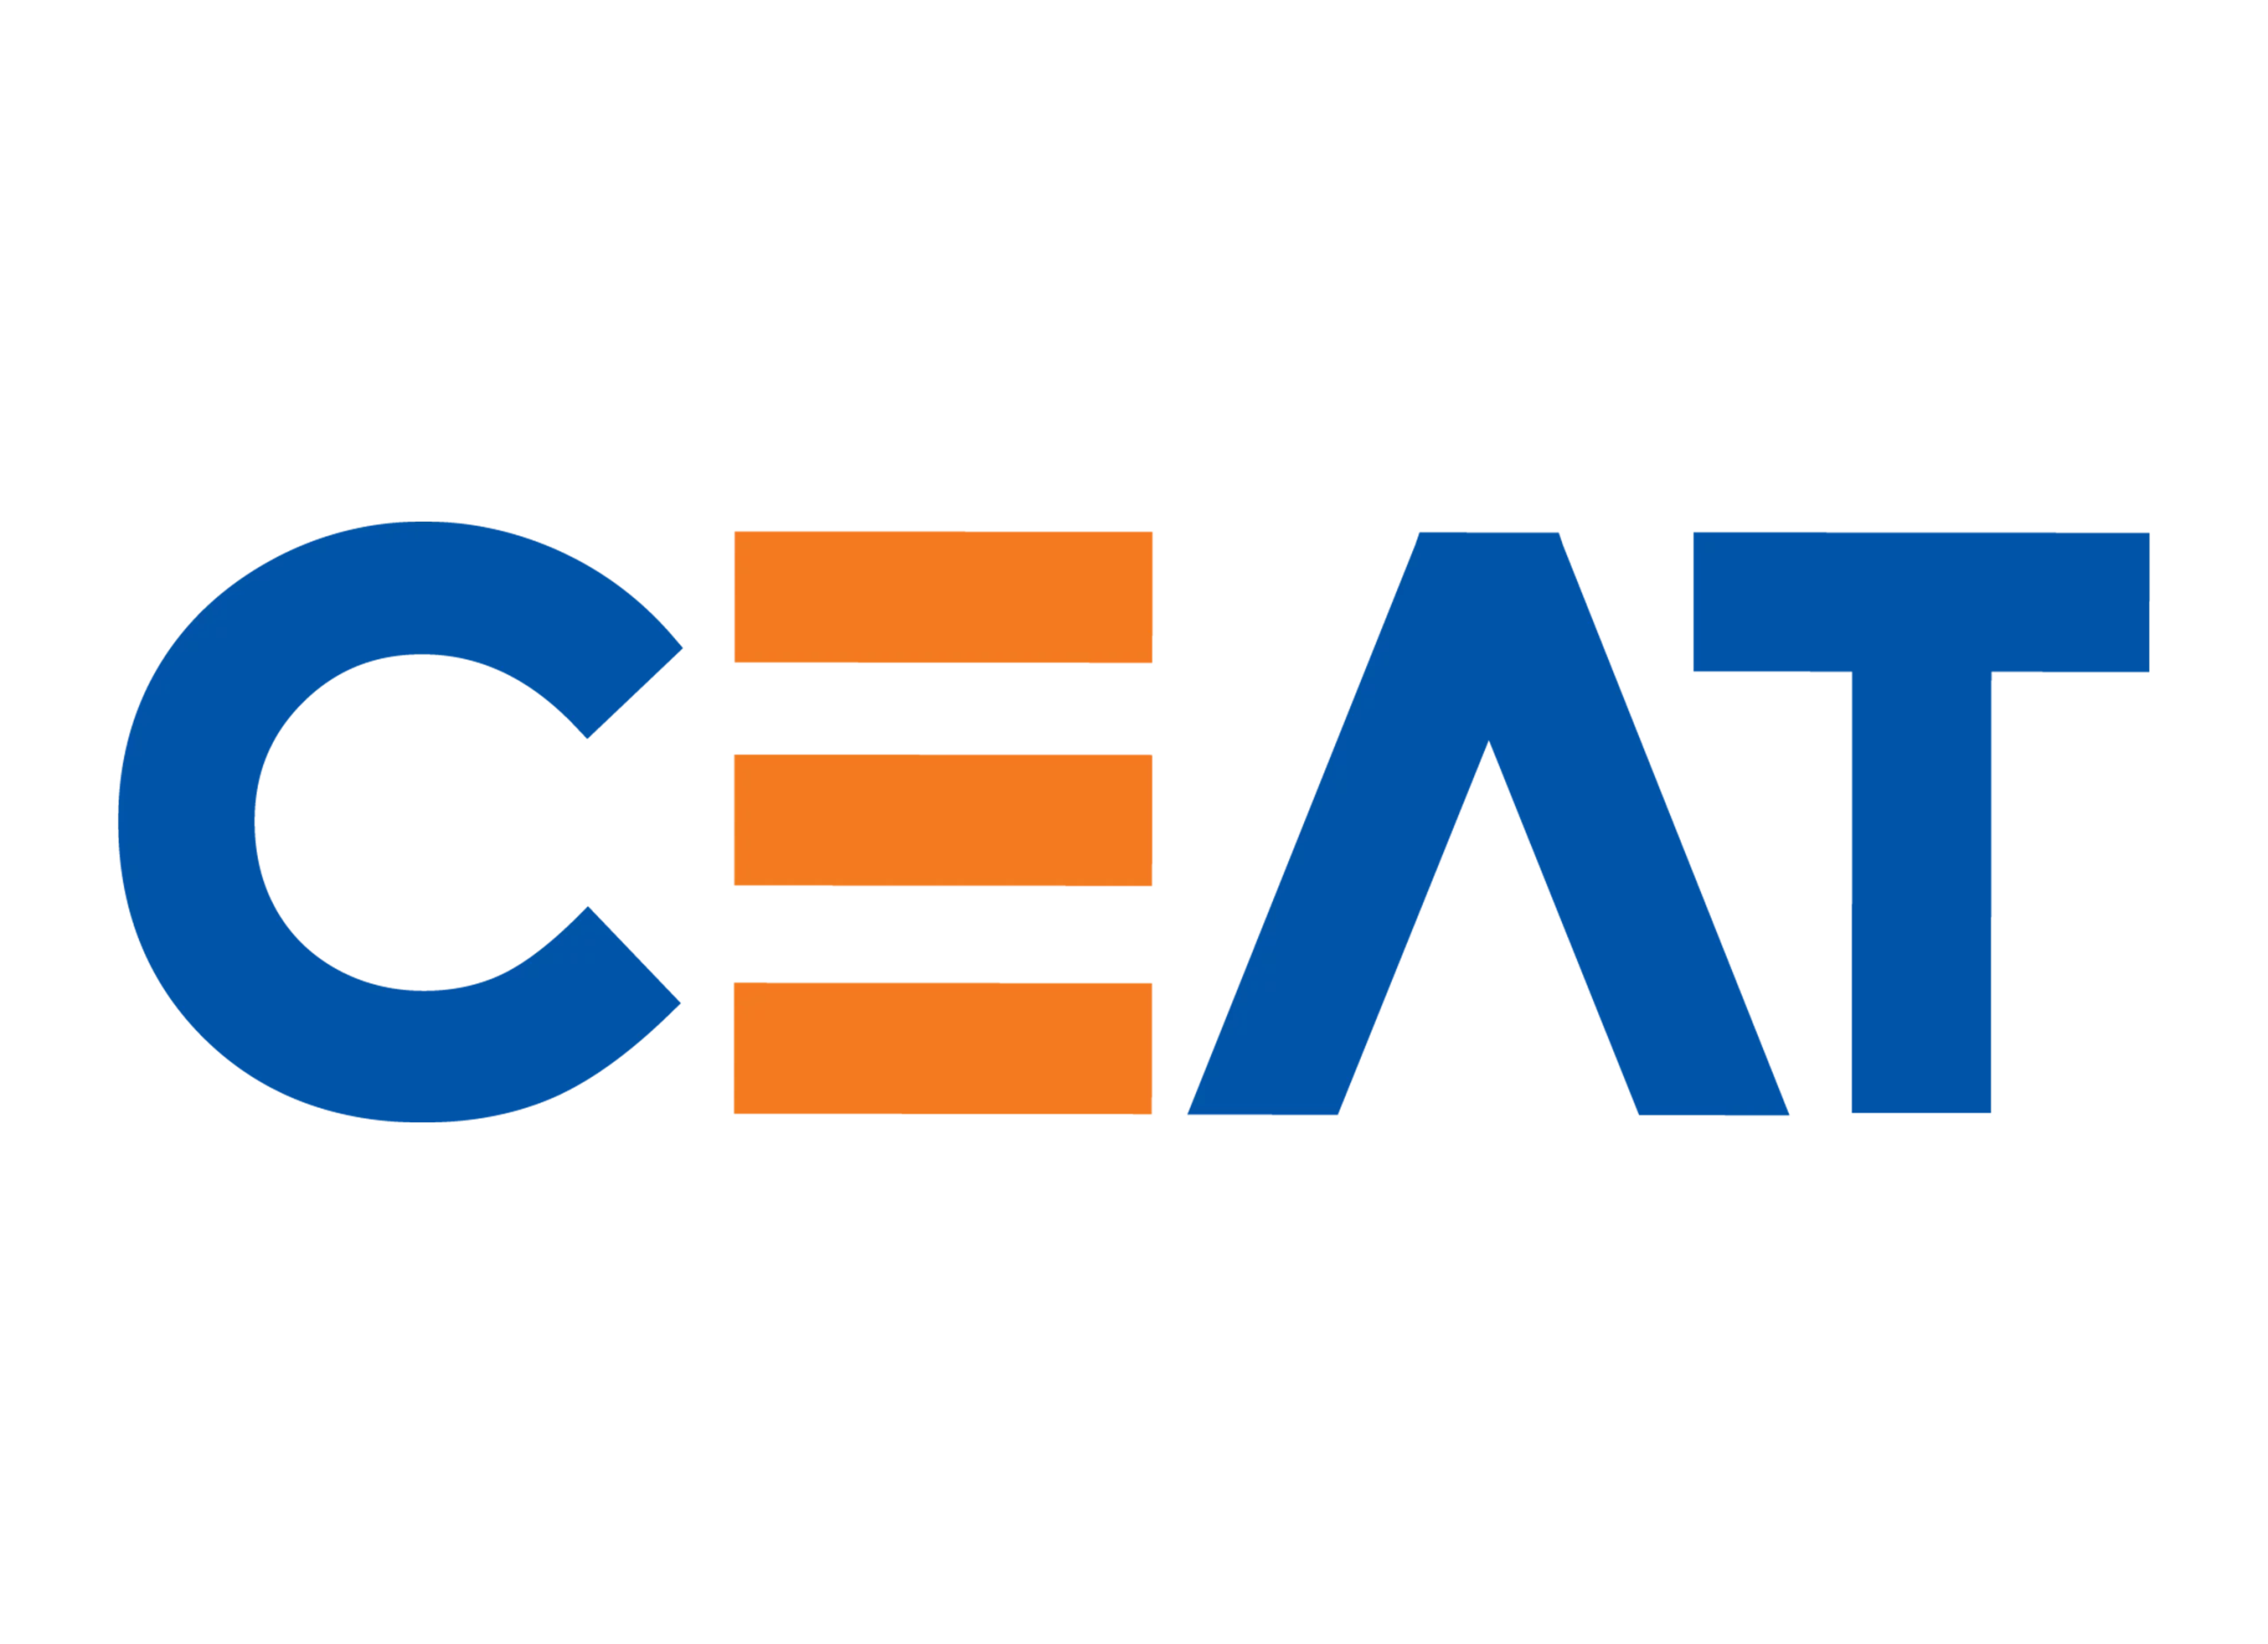 CEAT logo present